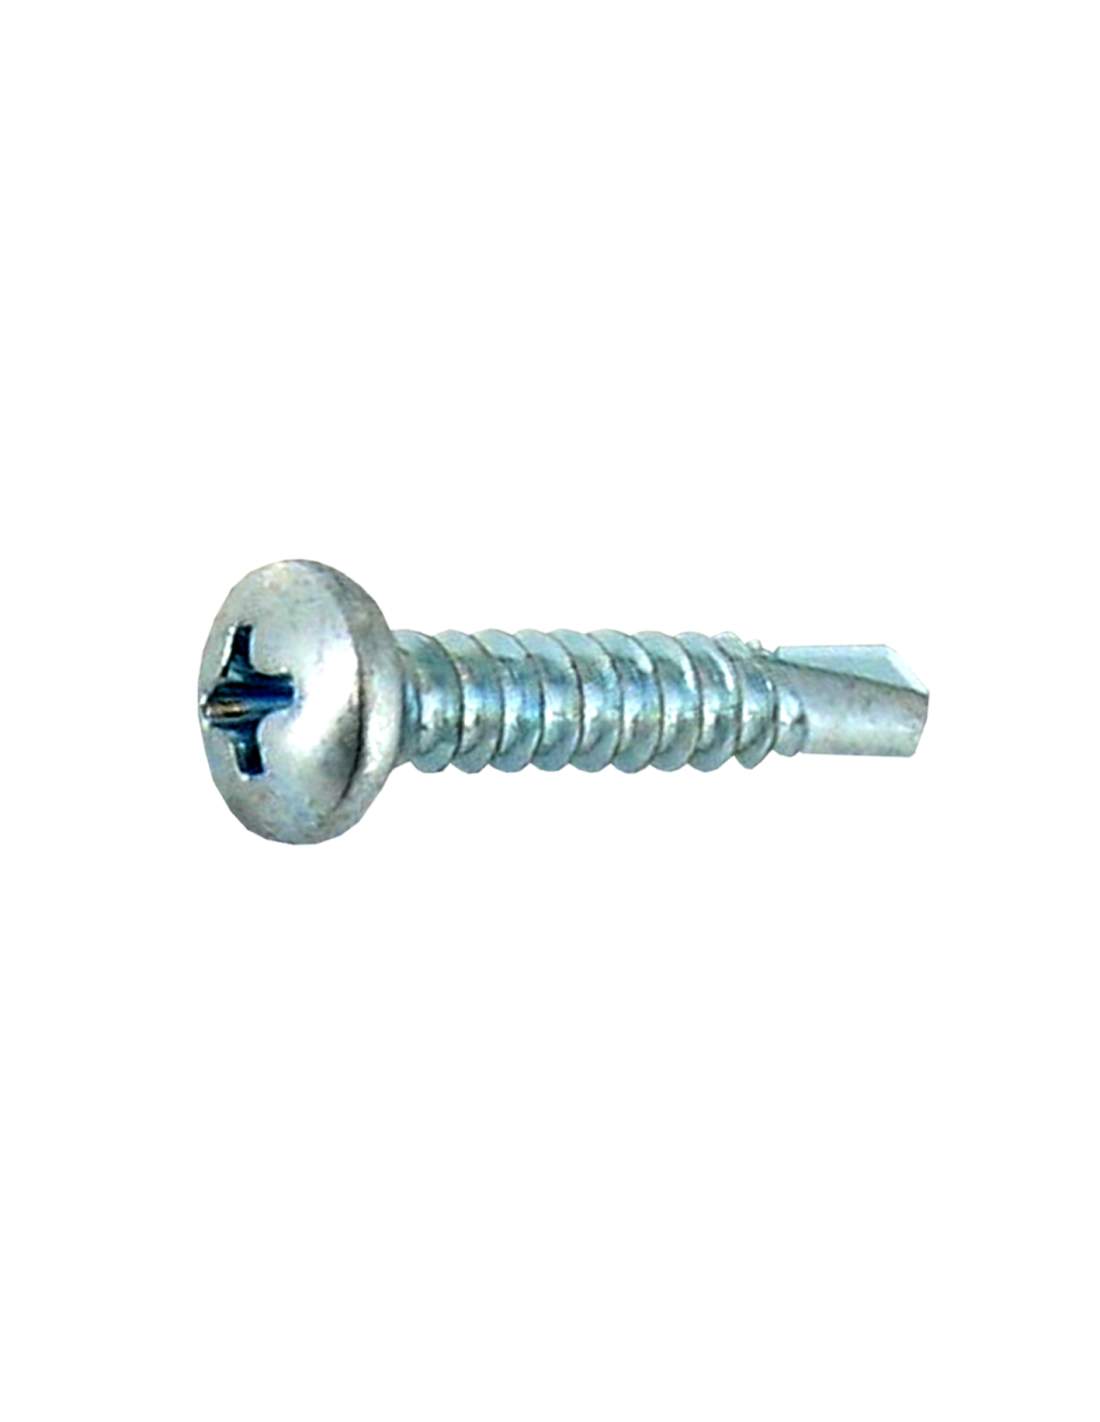 AZI 3.9x19 pan head self-drilling sheet metal screws, 24 pcs.